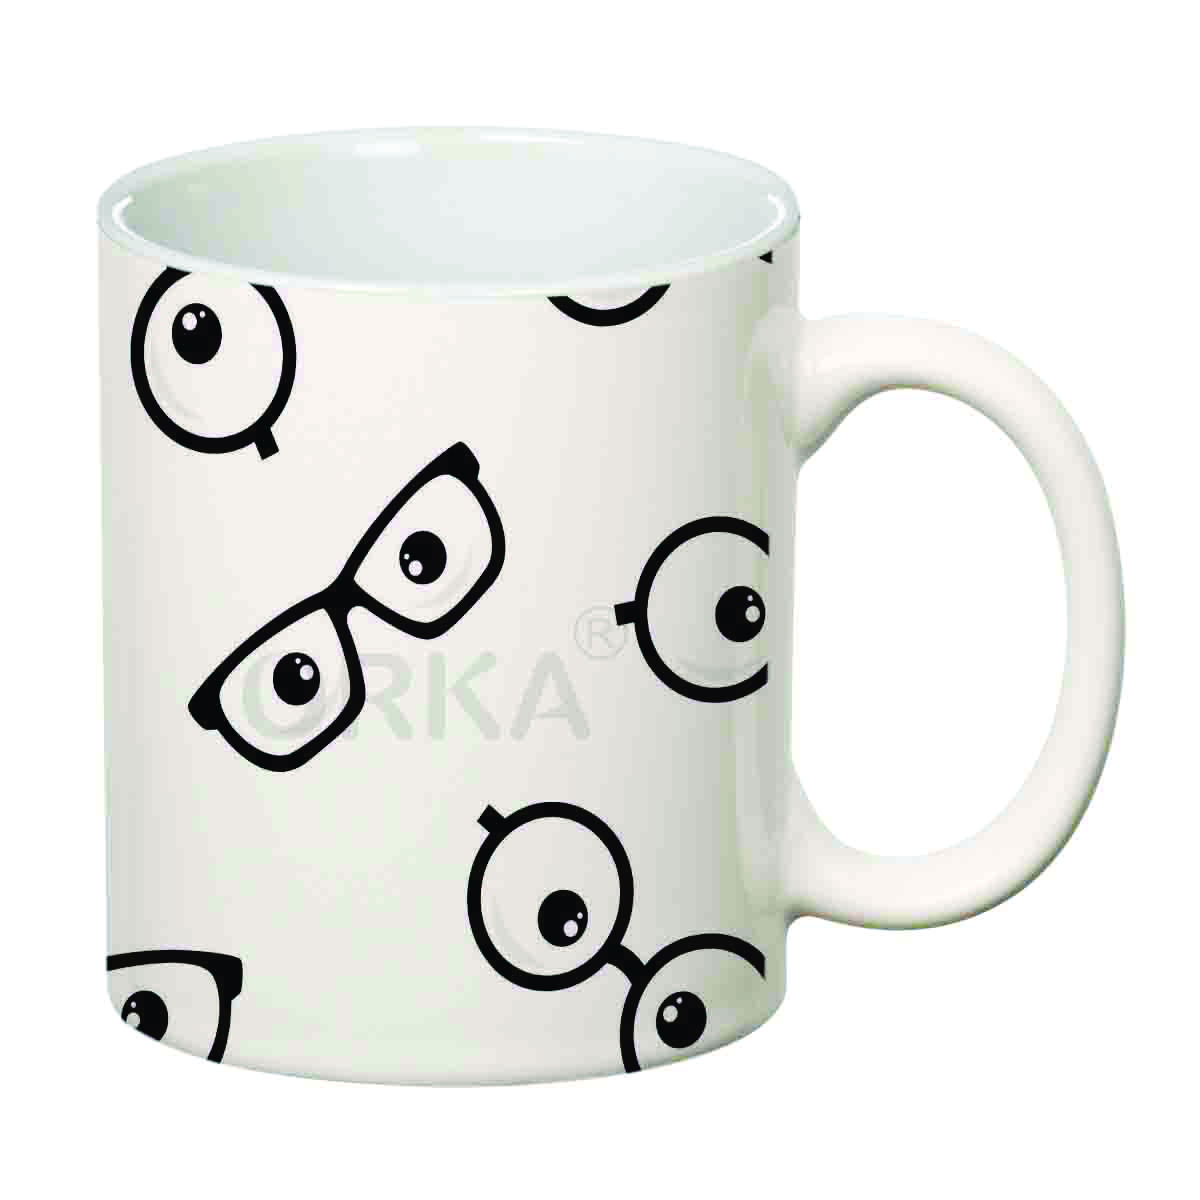 ORKA Coffee Mug(Spectacles) Theme 11 Oz   